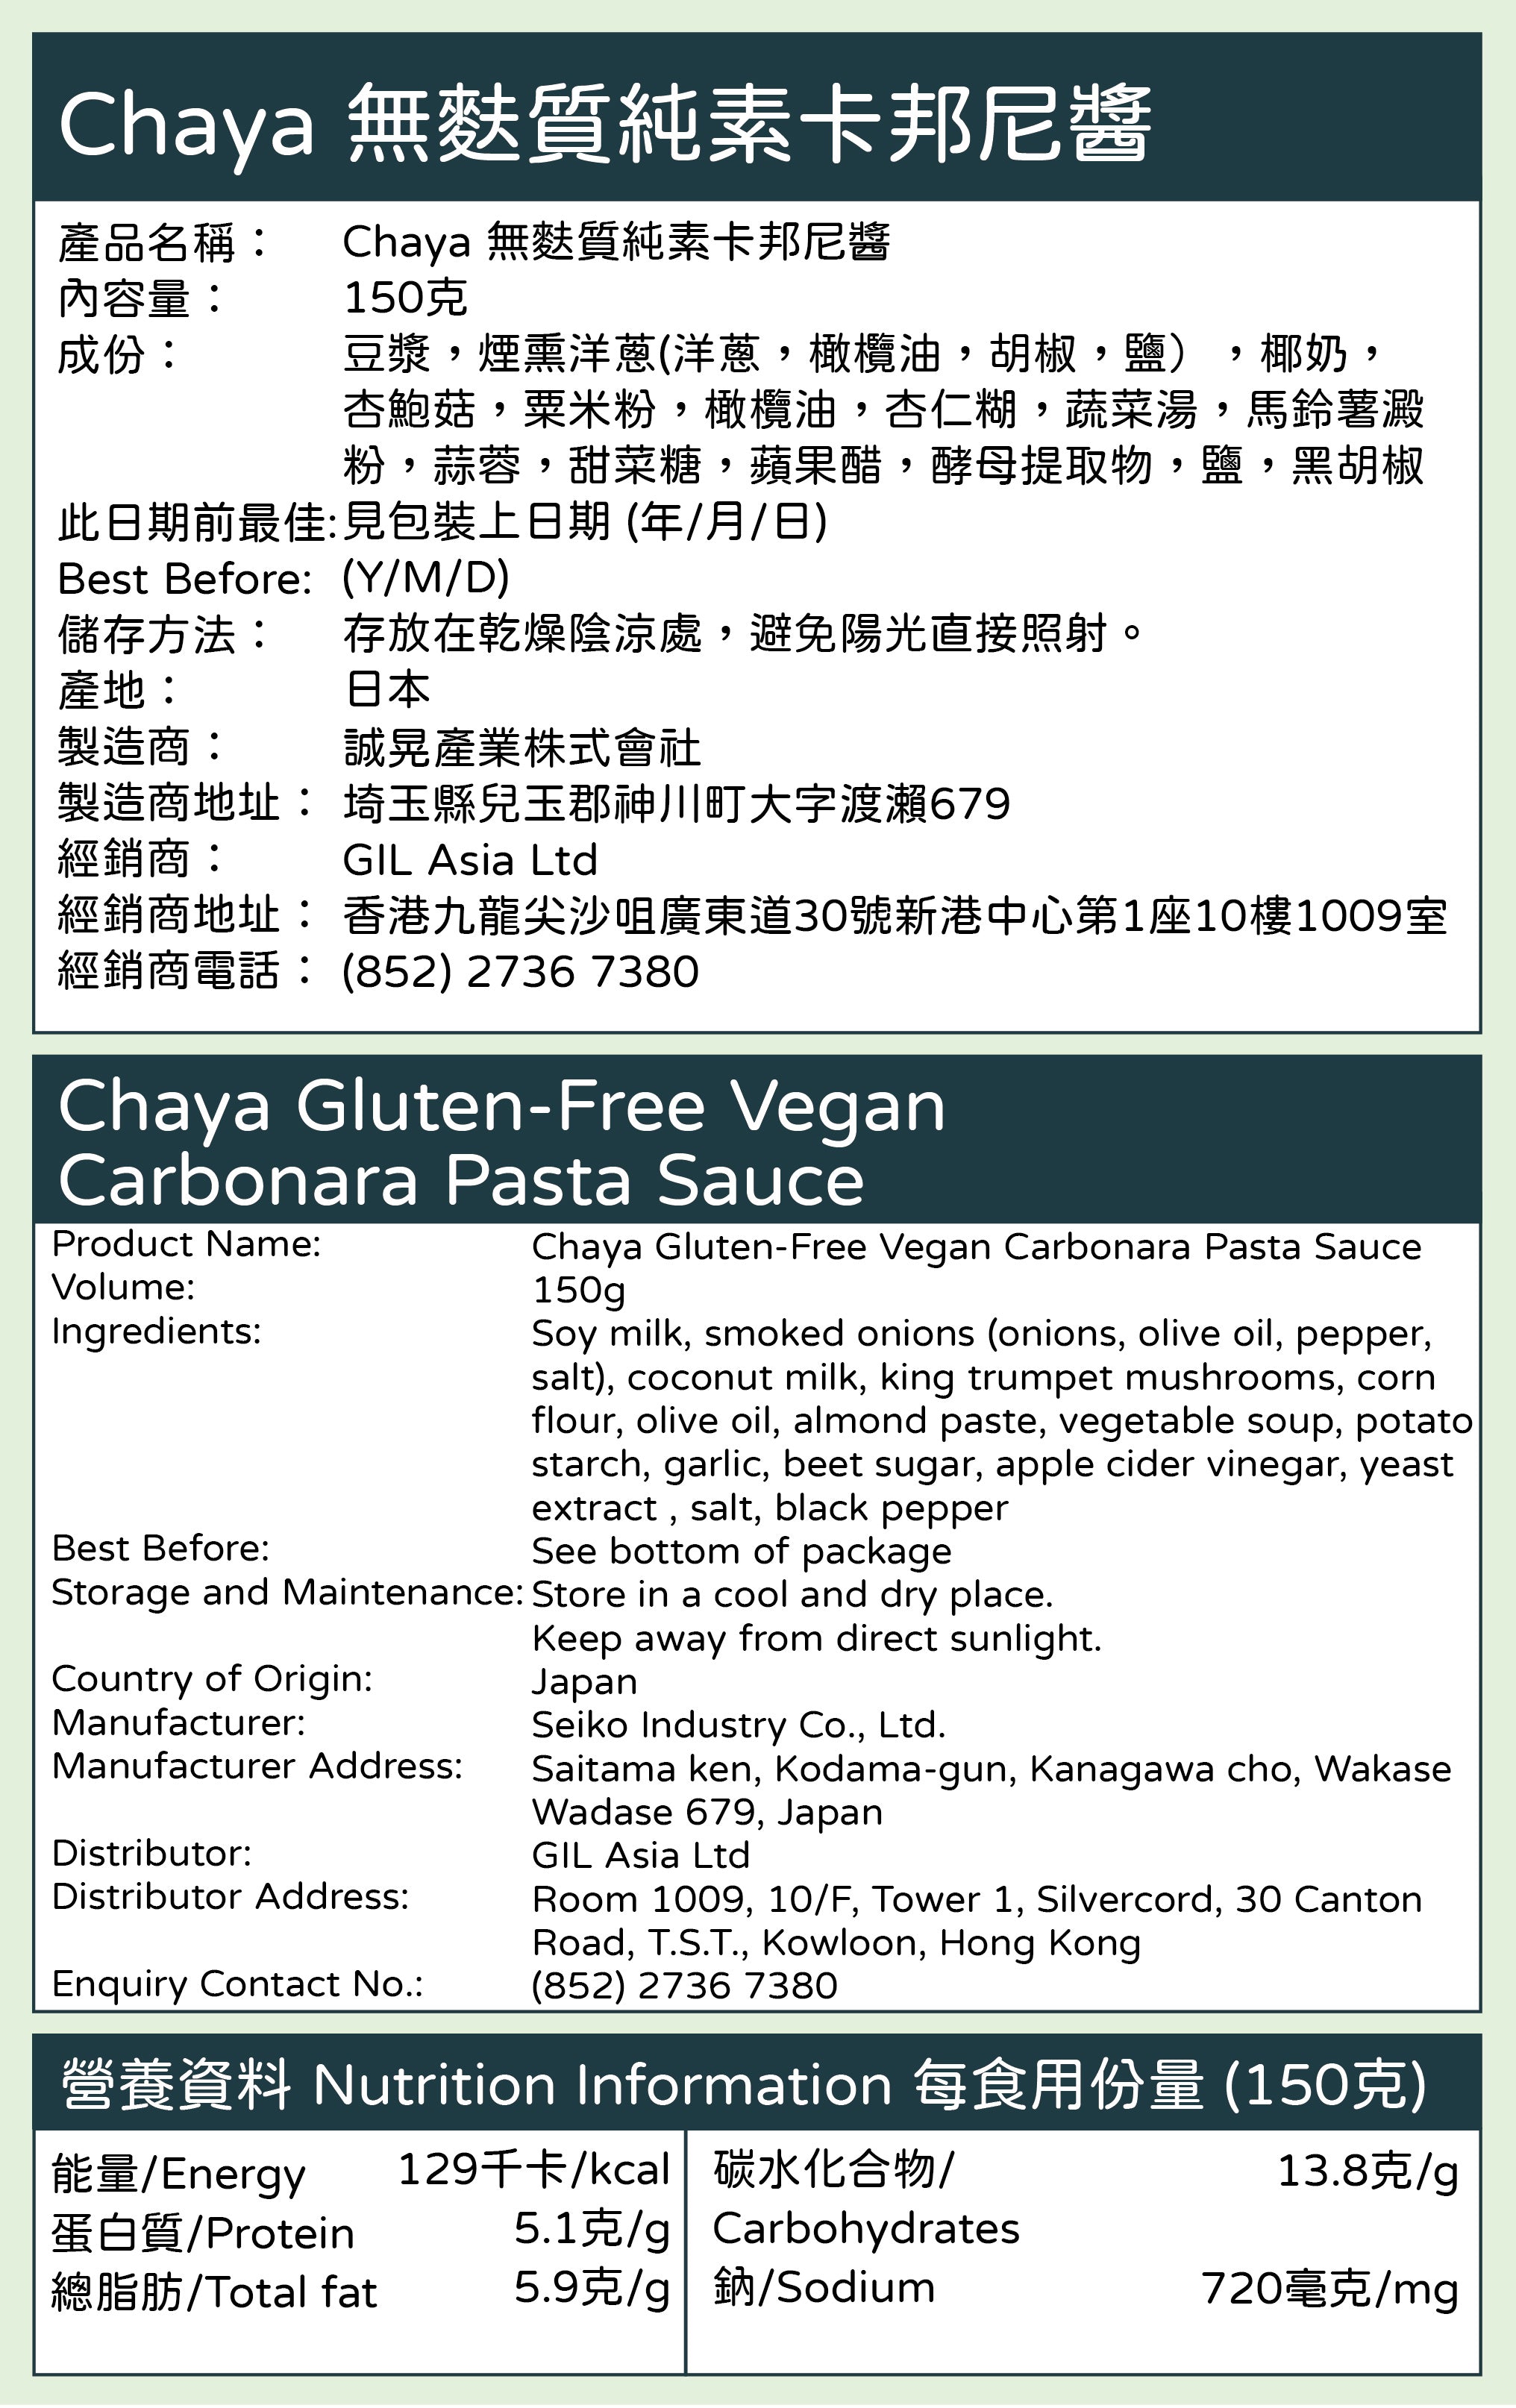 Chaya Gluten-Free Vegan Carbonara Pasta Sauce [150g]